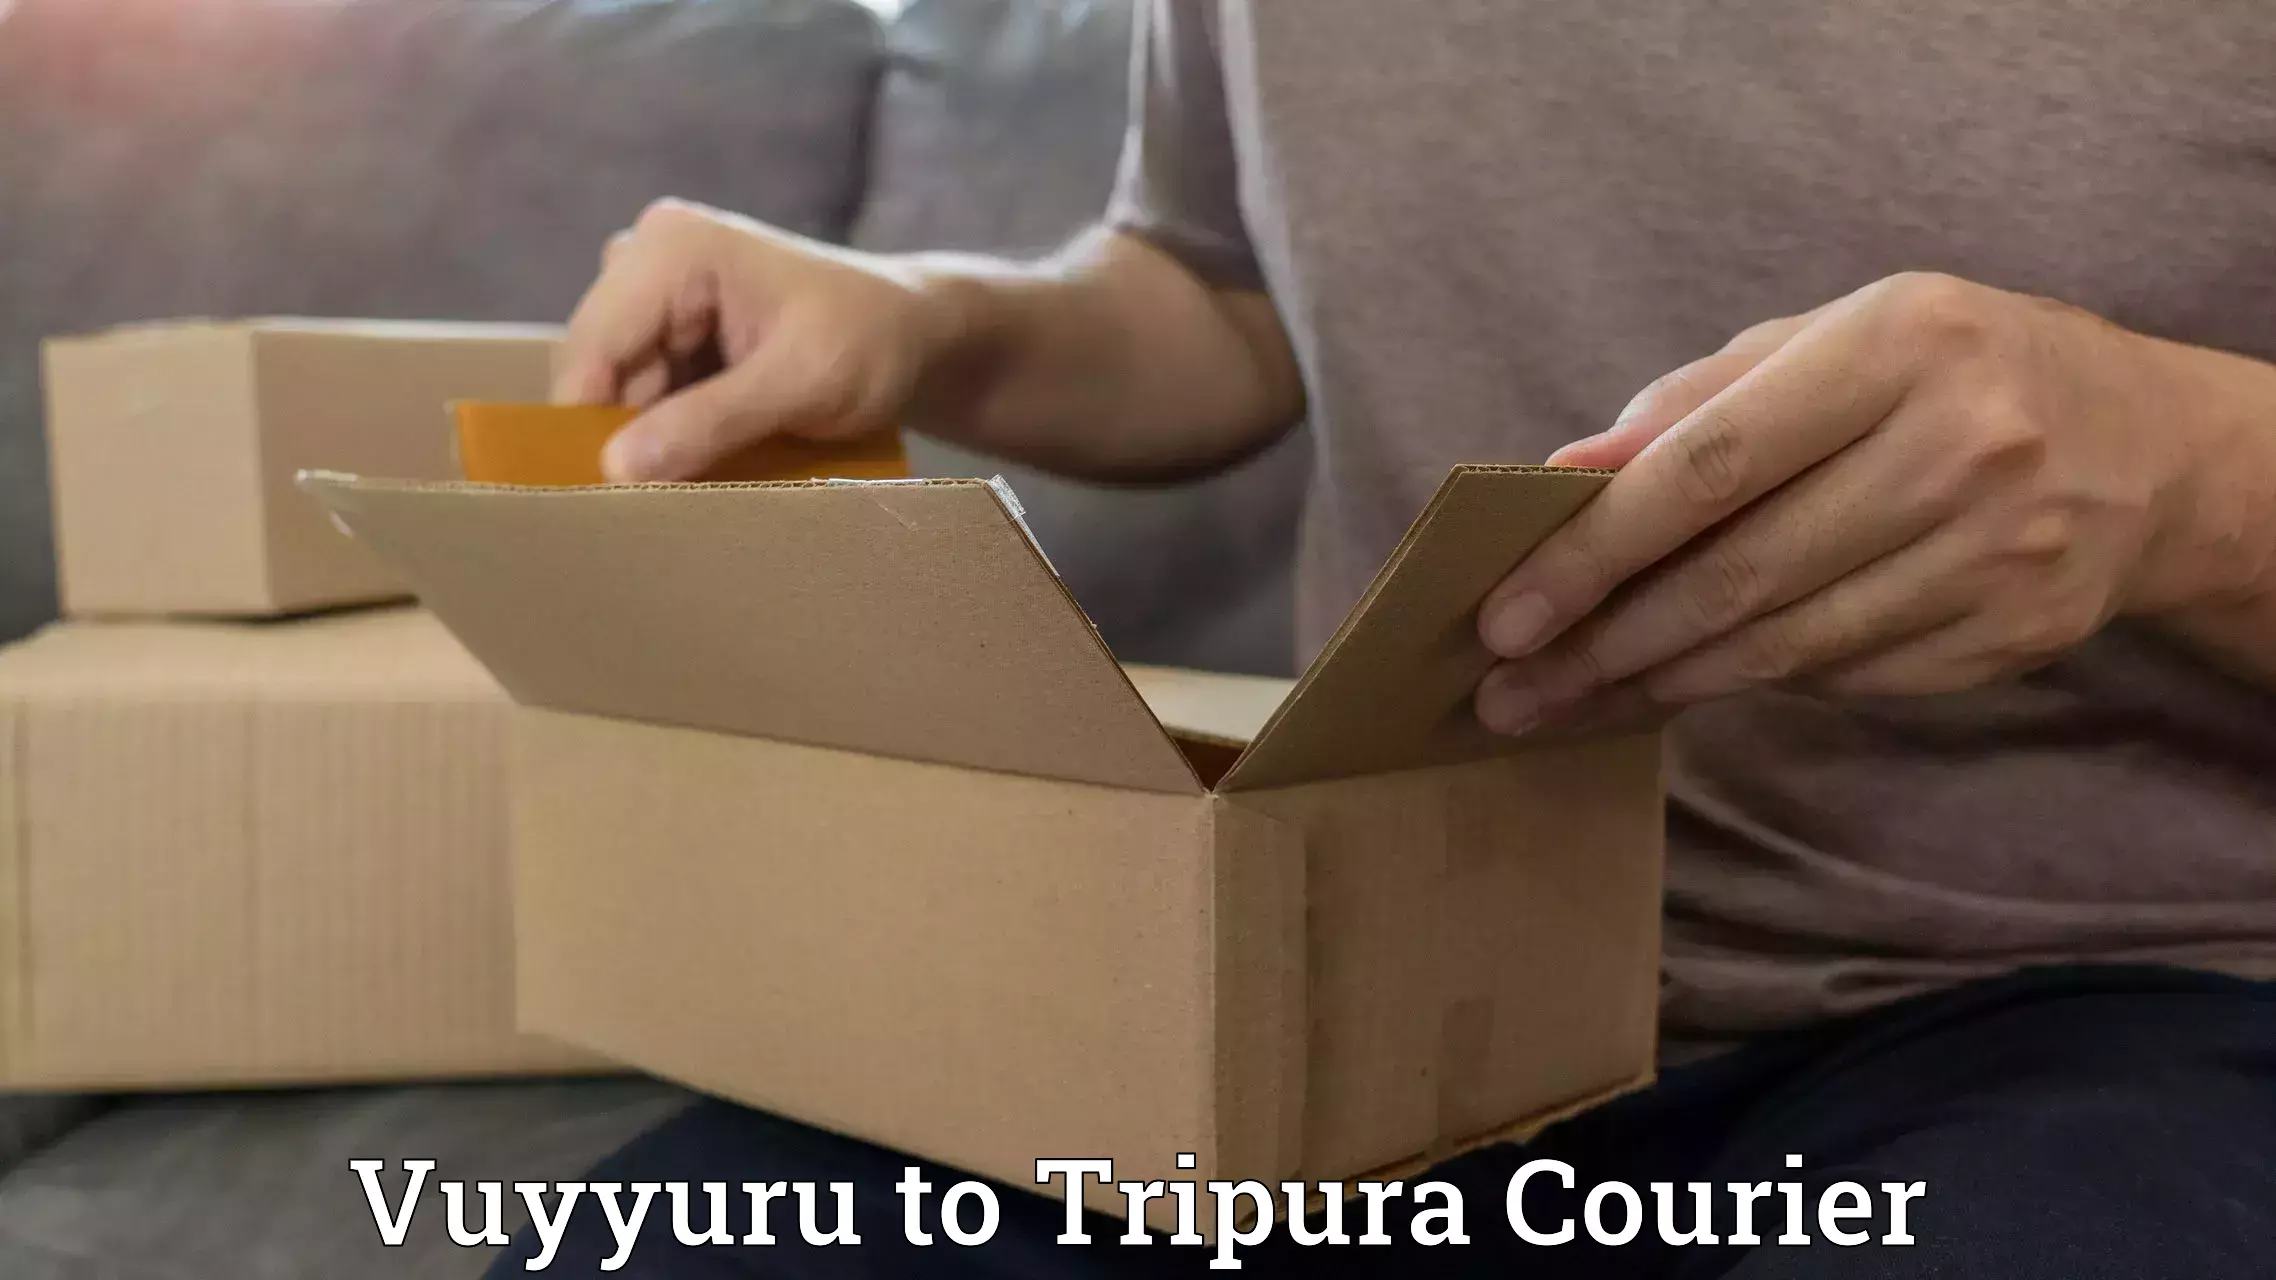 Courier service innovation Vuyyuru to Udaipur Tripura